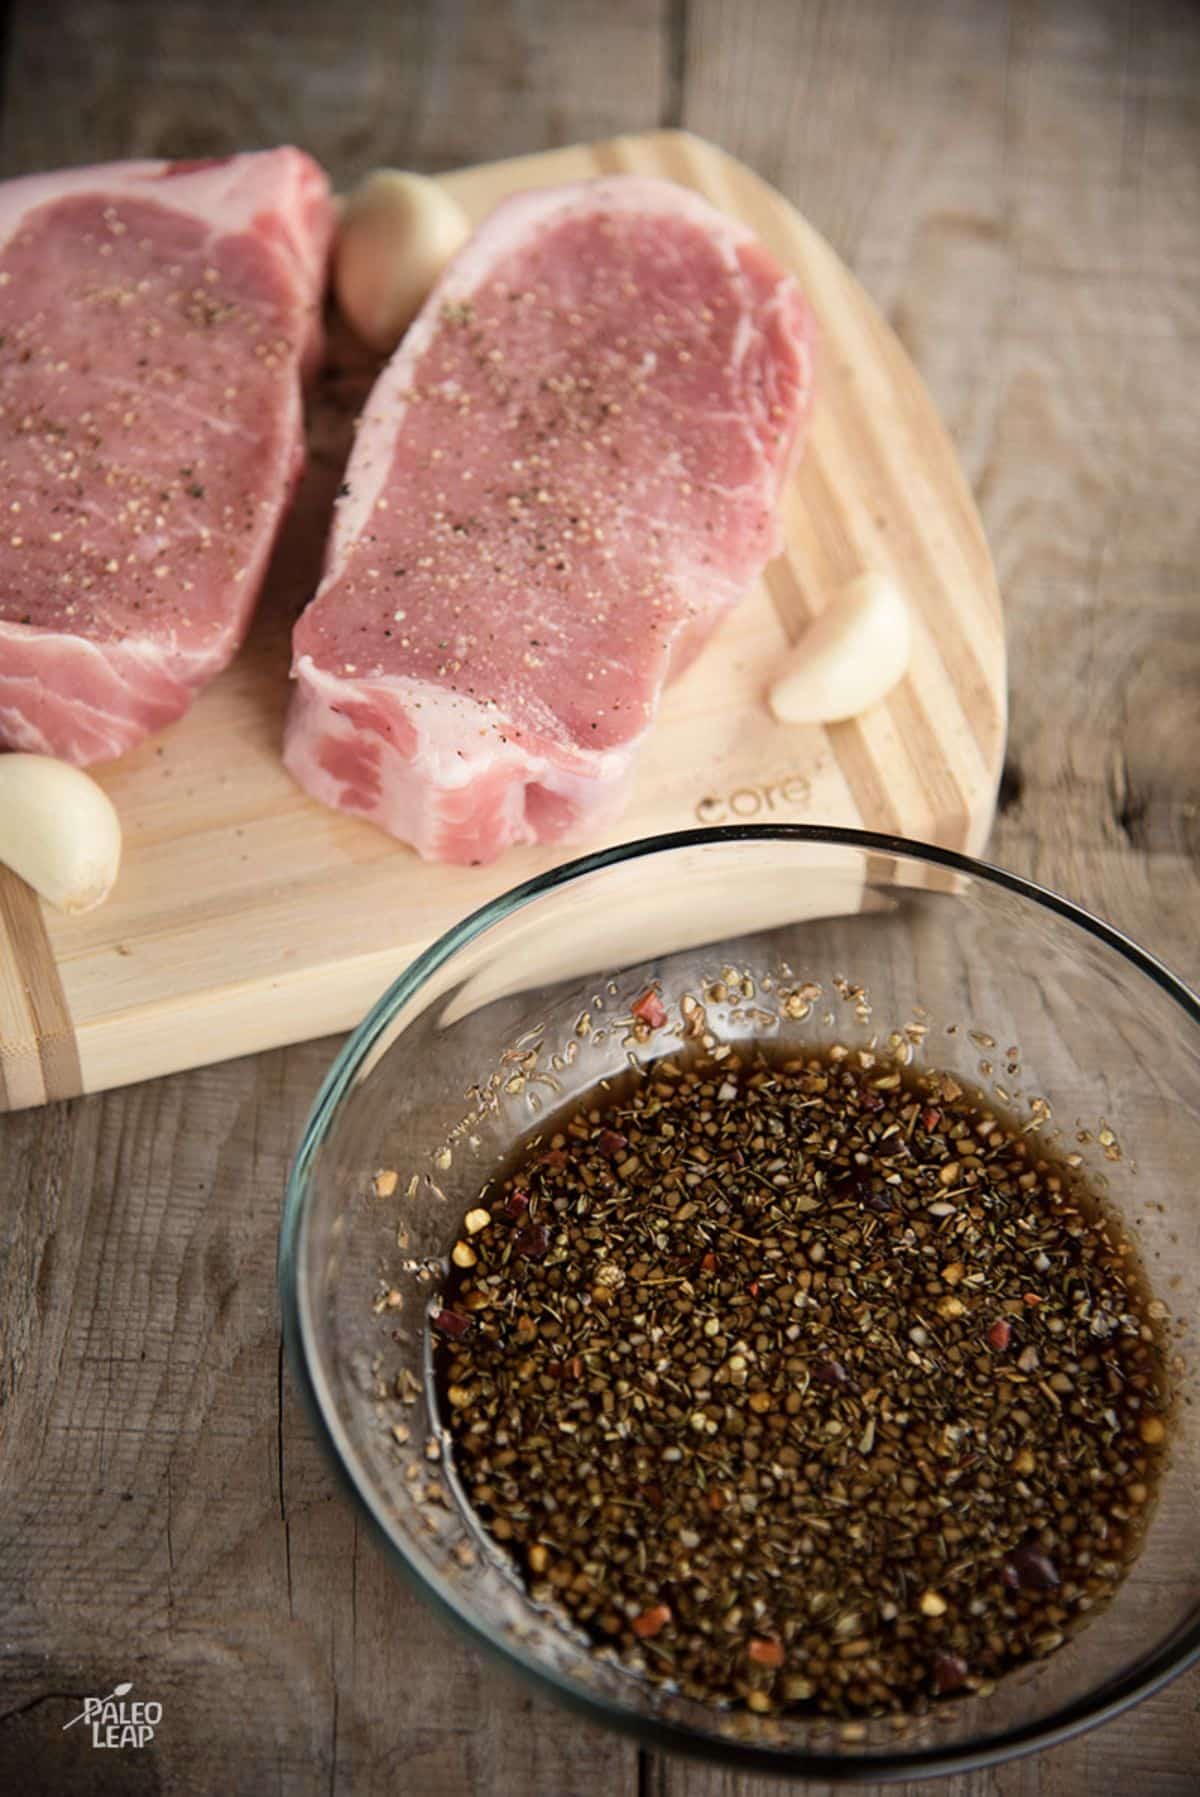 Pork Chops With Balsamic Glaze Recipe Preparation